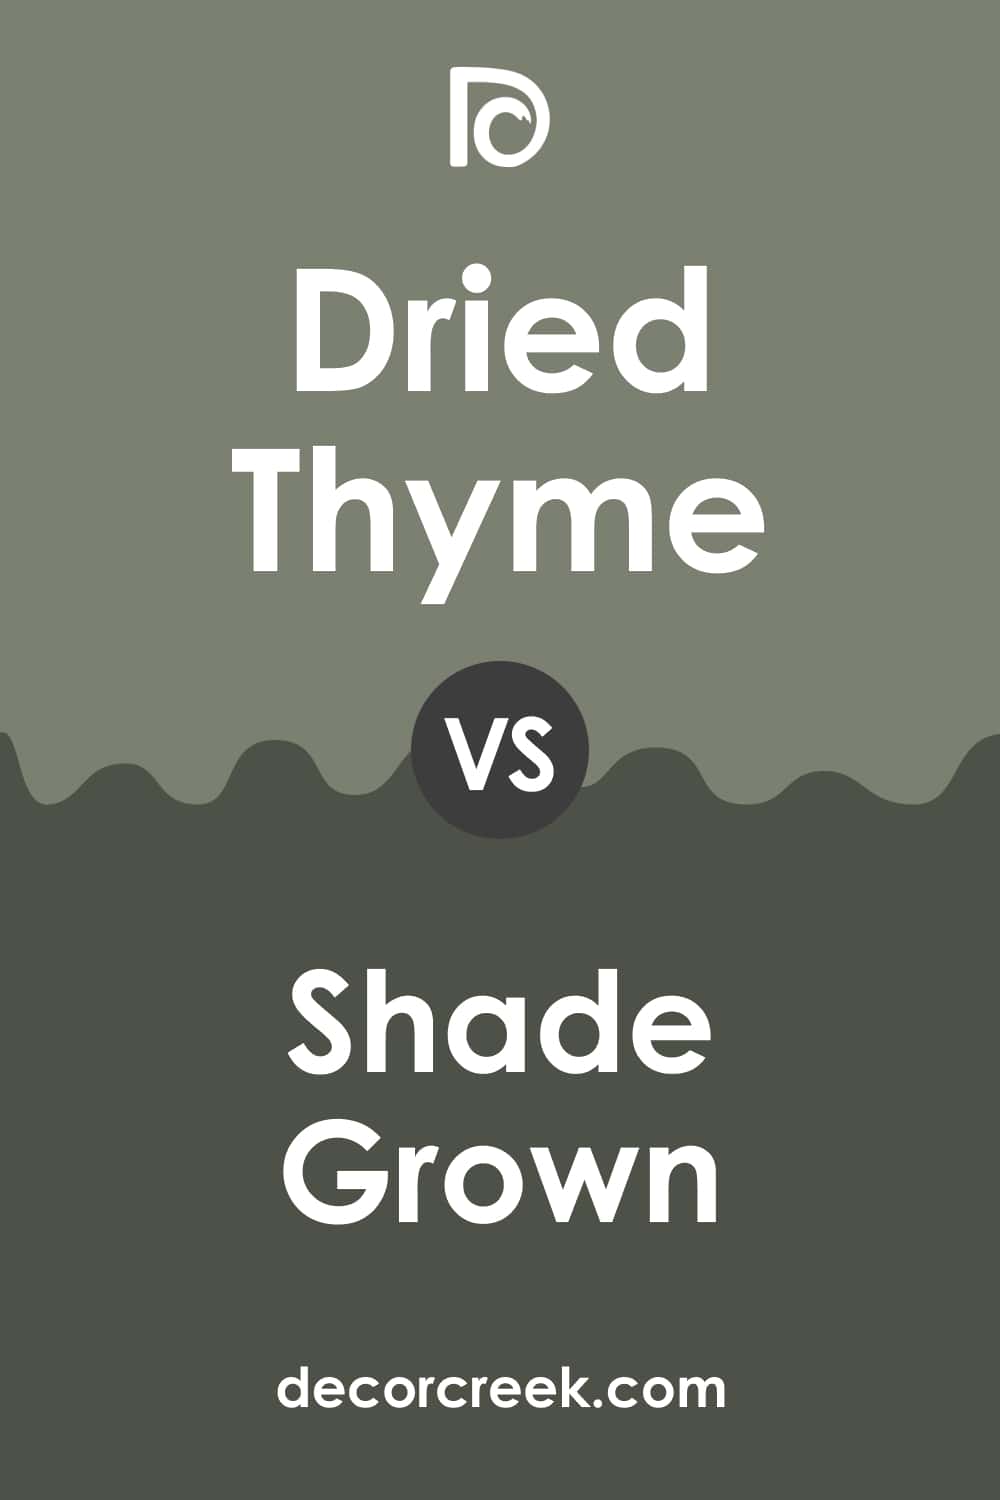 Dried Thyme vs Shade Grown